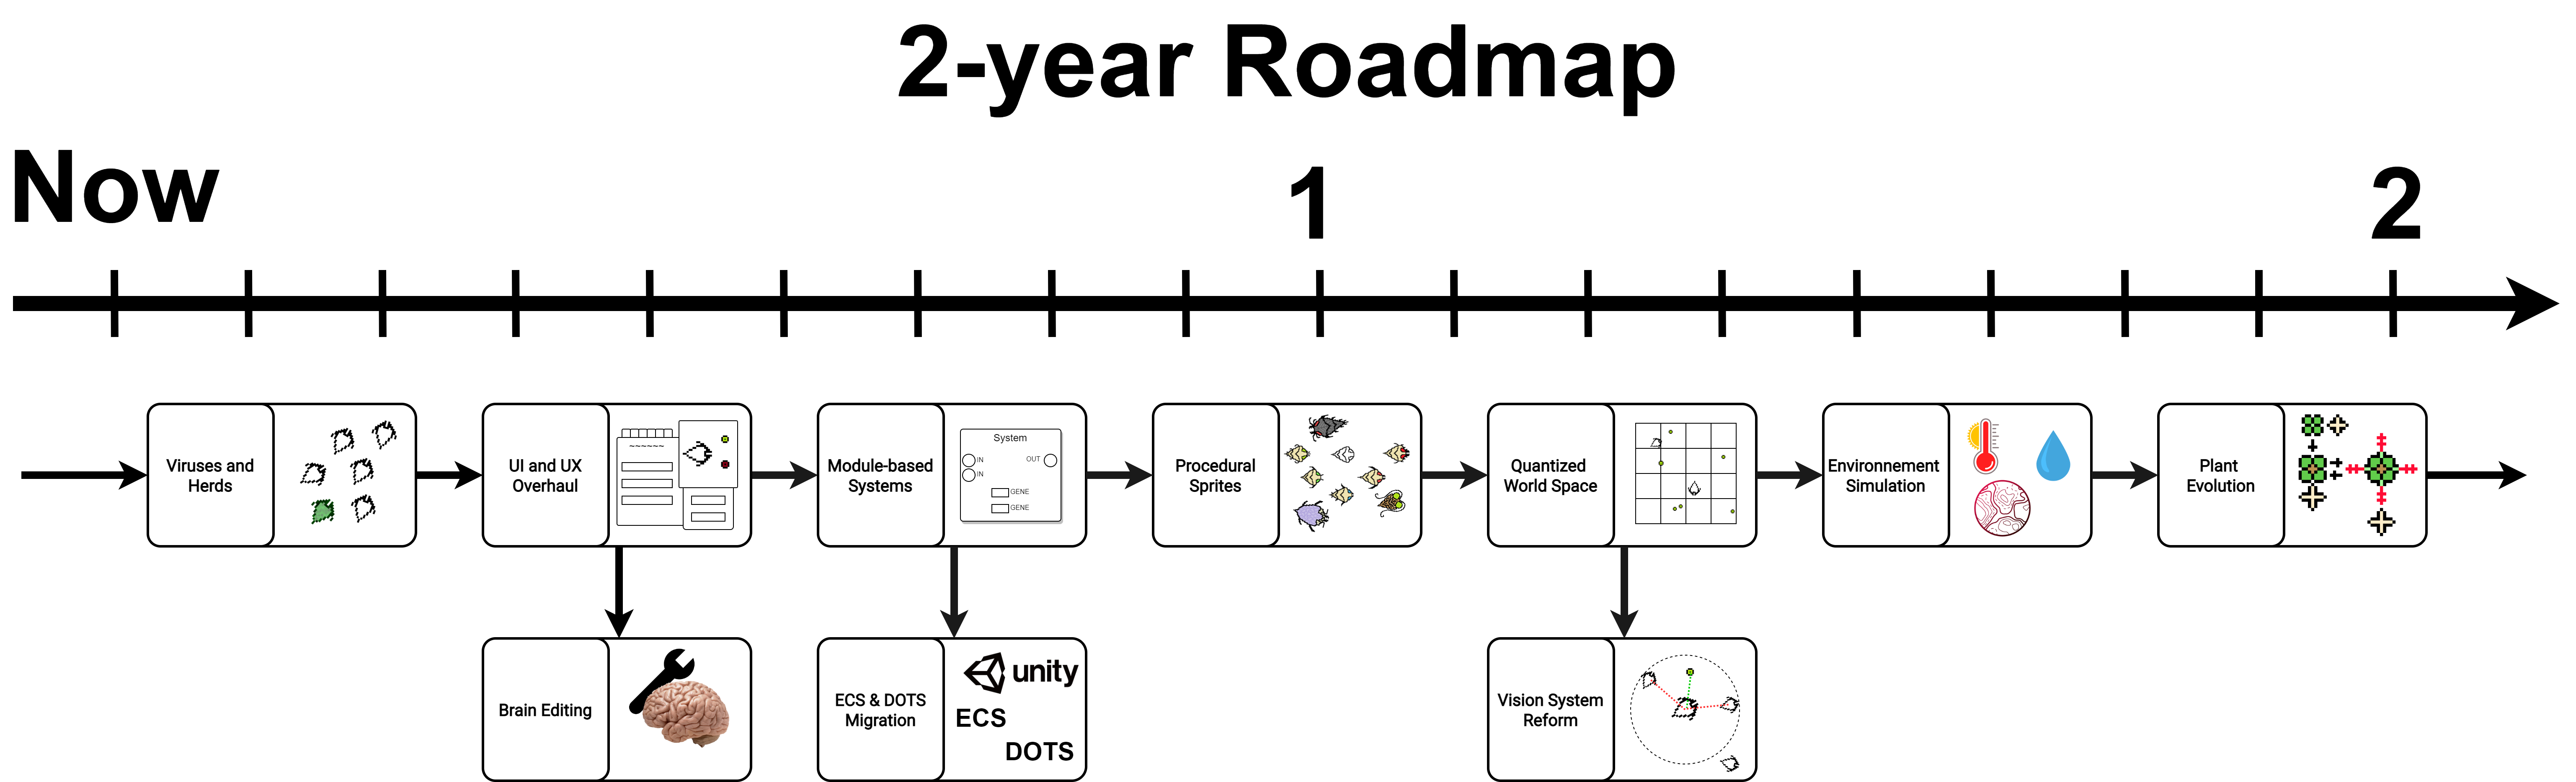 2-year Roadmap